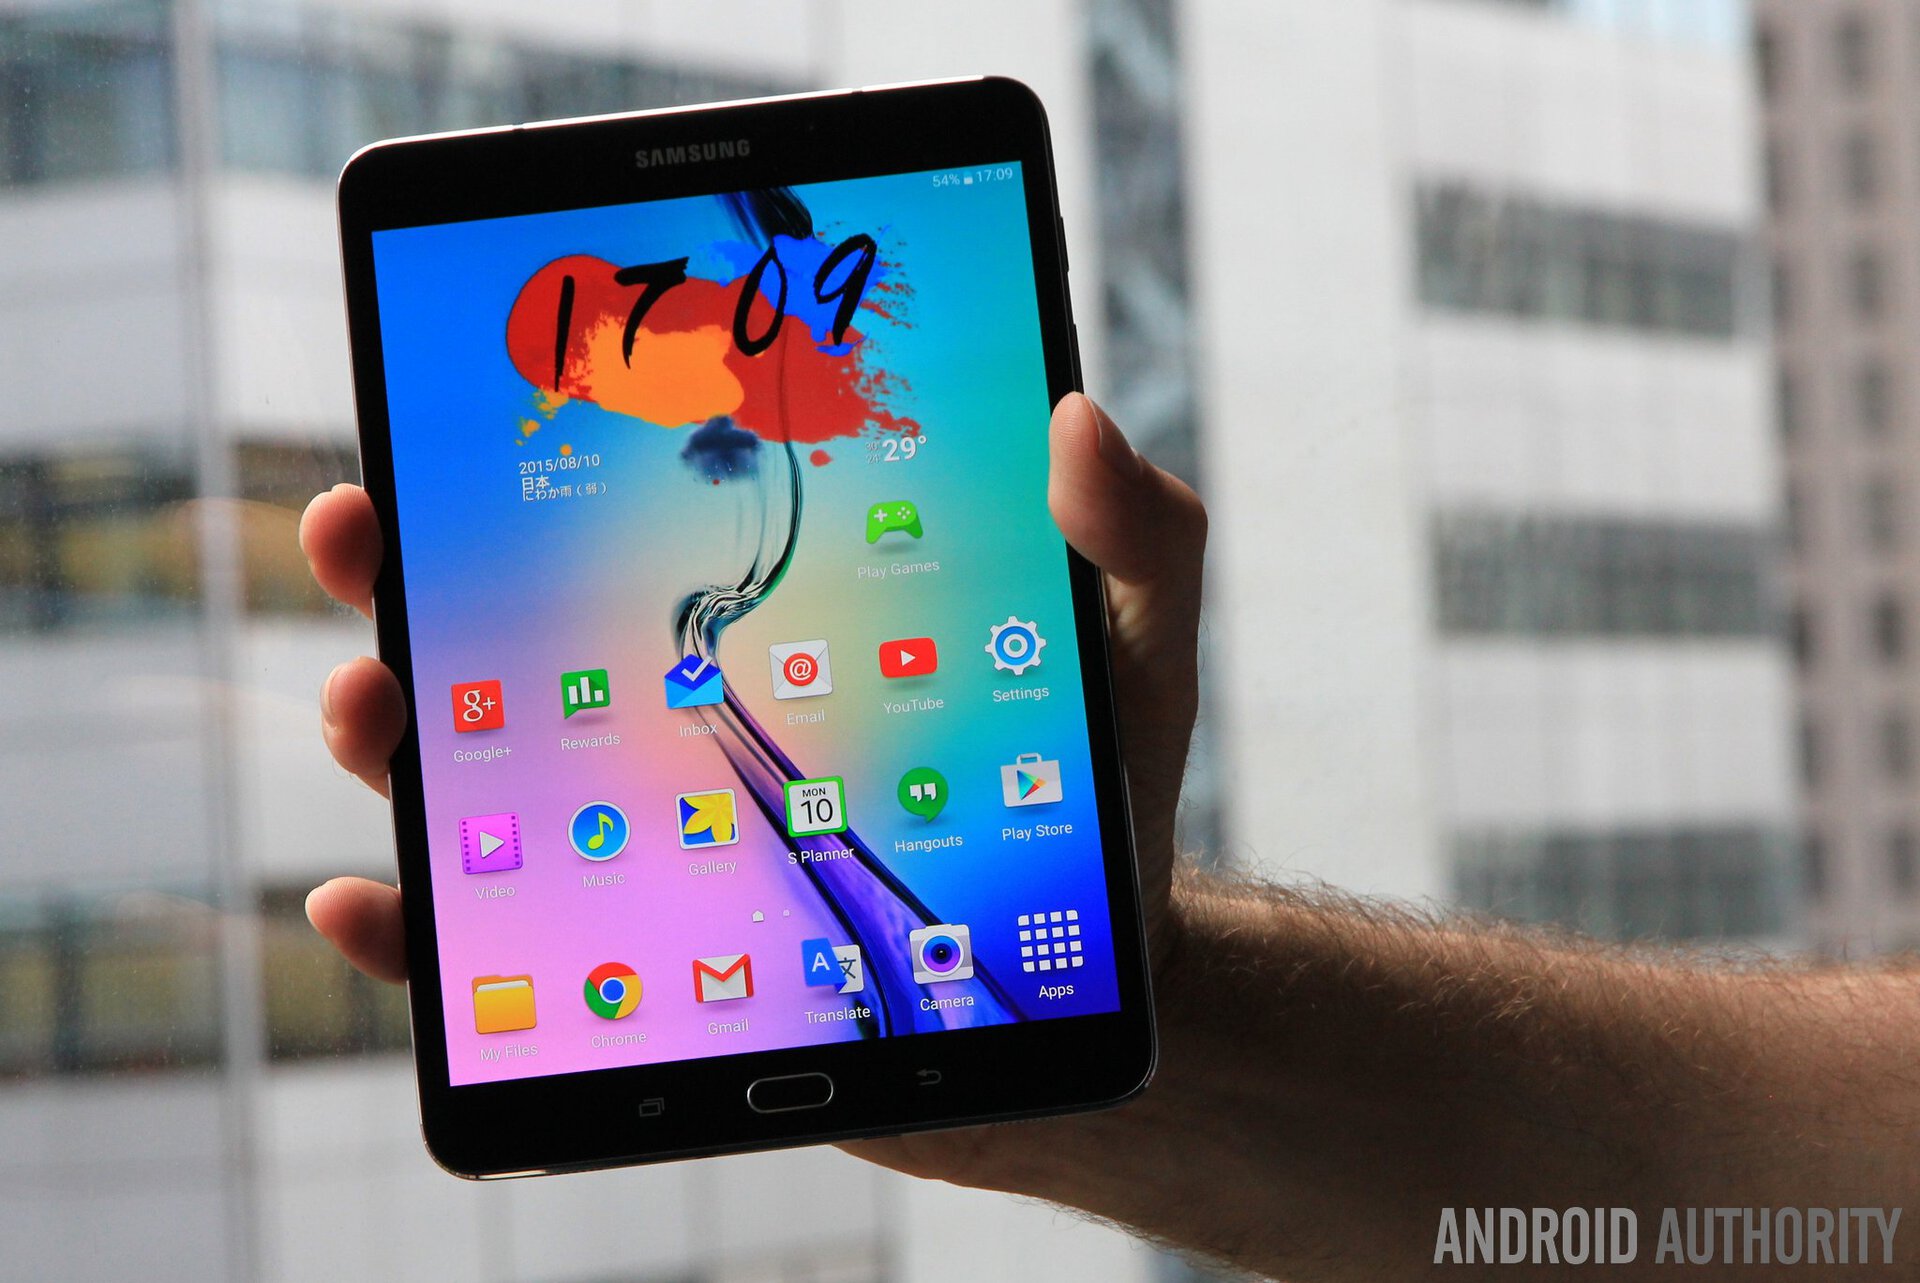 Fokken Verleden Gevoel Impressions: The Galaxy Tab S2 is a curious "top tier" tablet